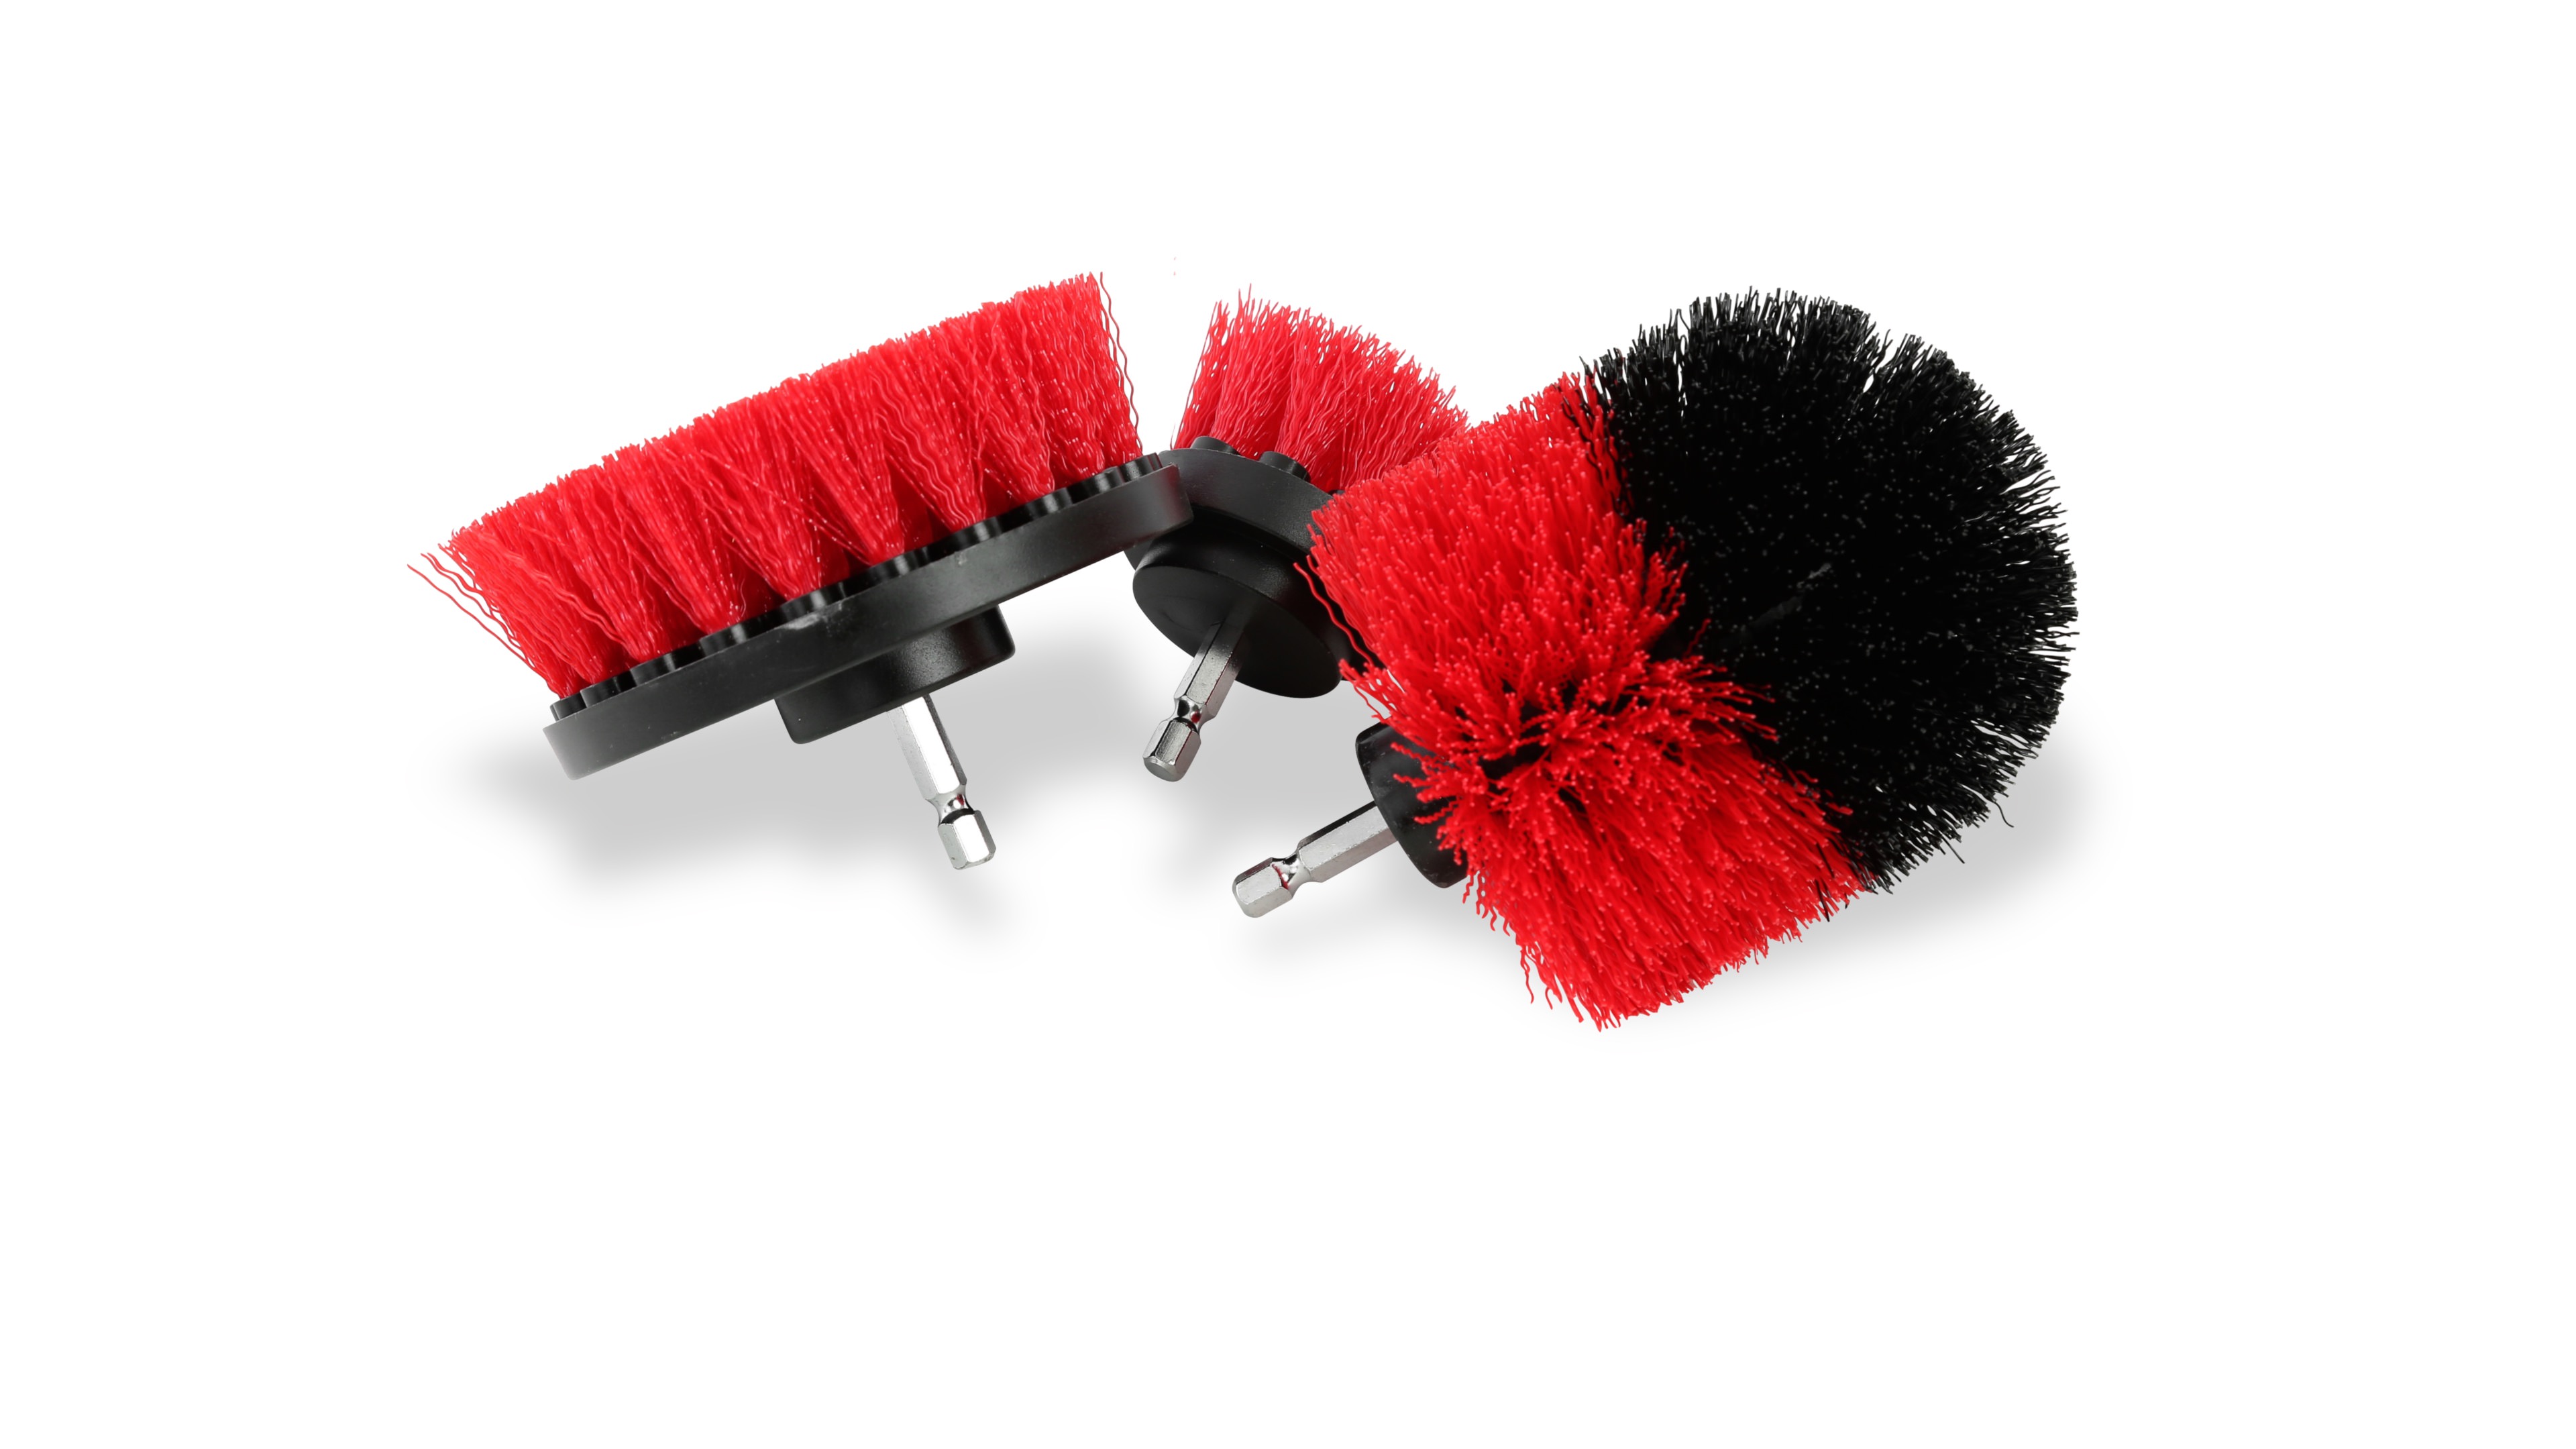 Hyper Tough Nylon Scrub Brush Cleaning Attachments for Power Drills, 3-Piece, Black 41026